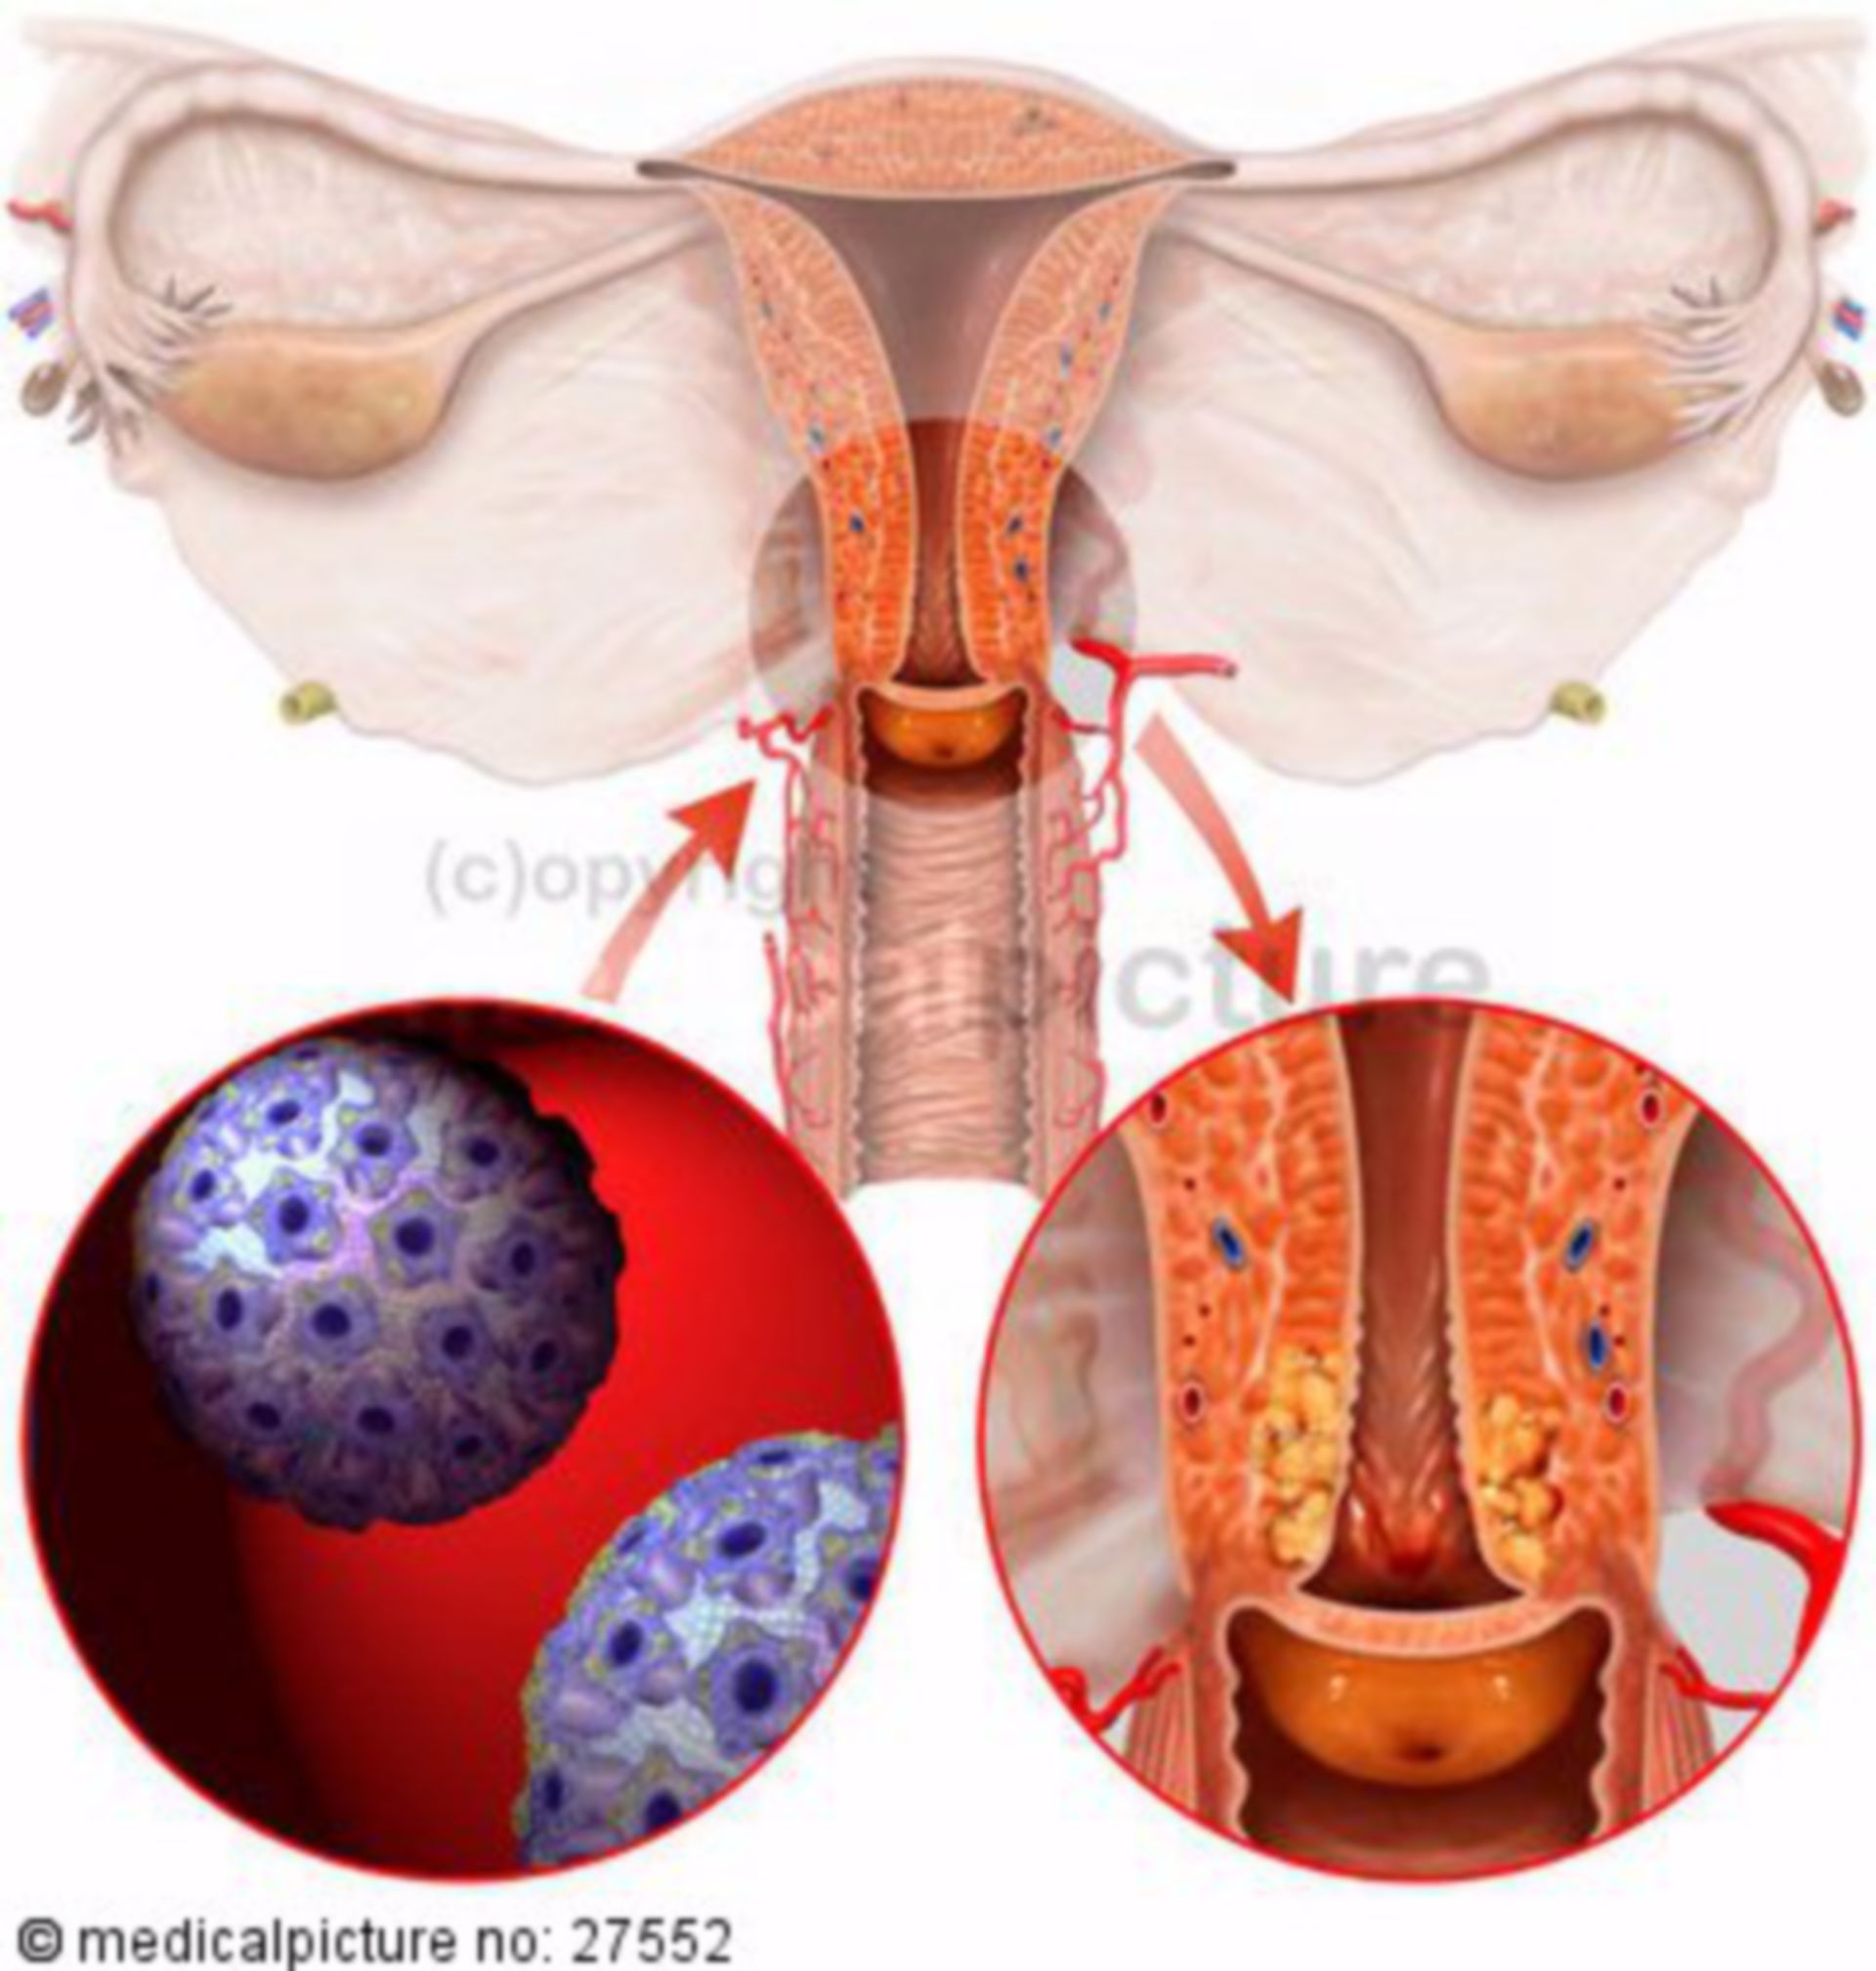 Cervical carcinoma